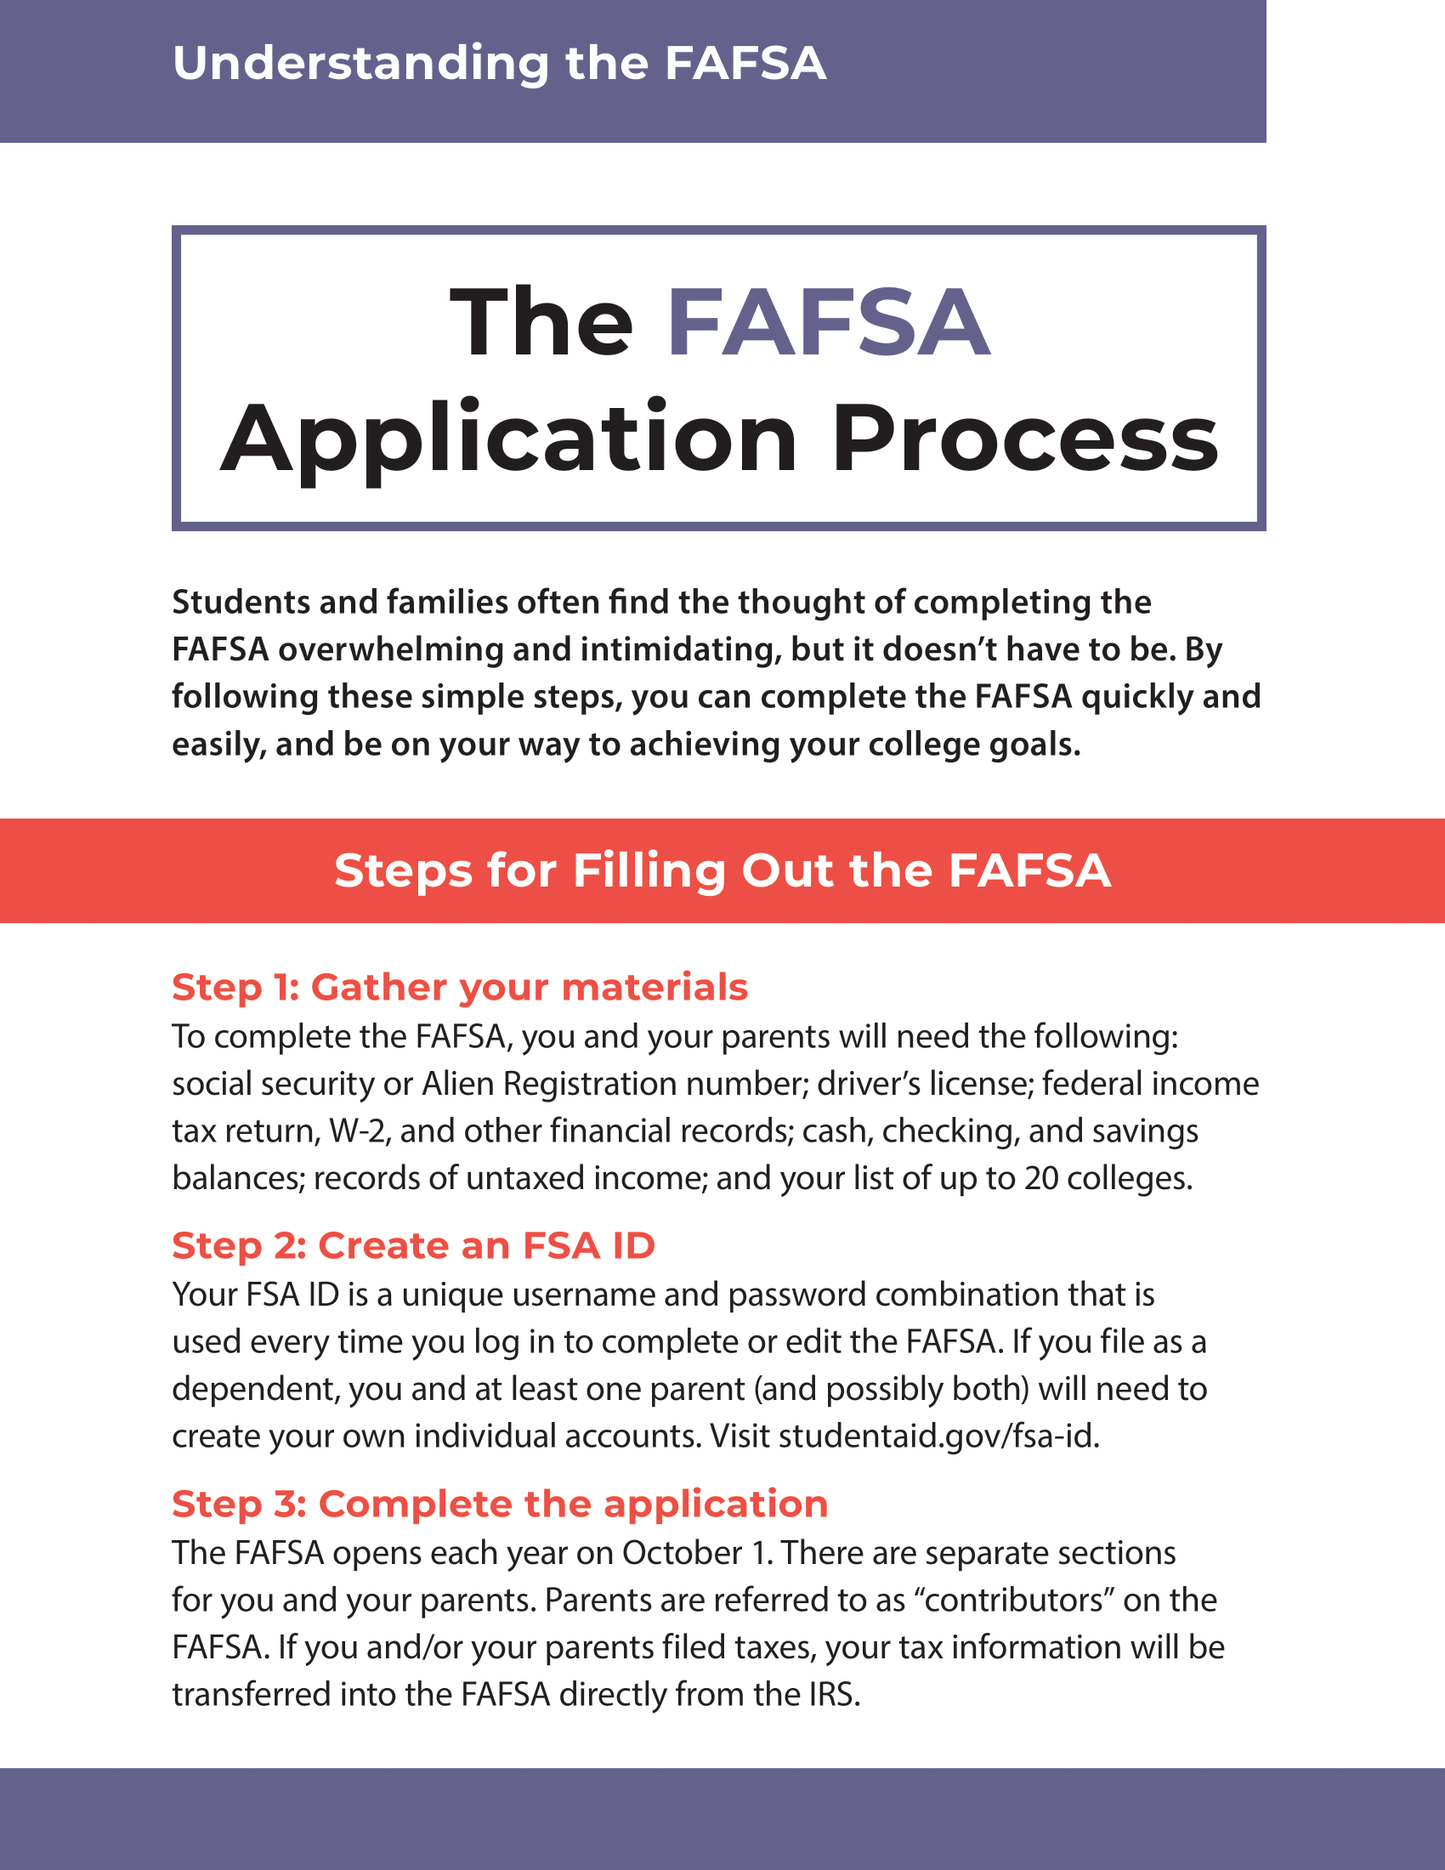 The FAFSA Application Process